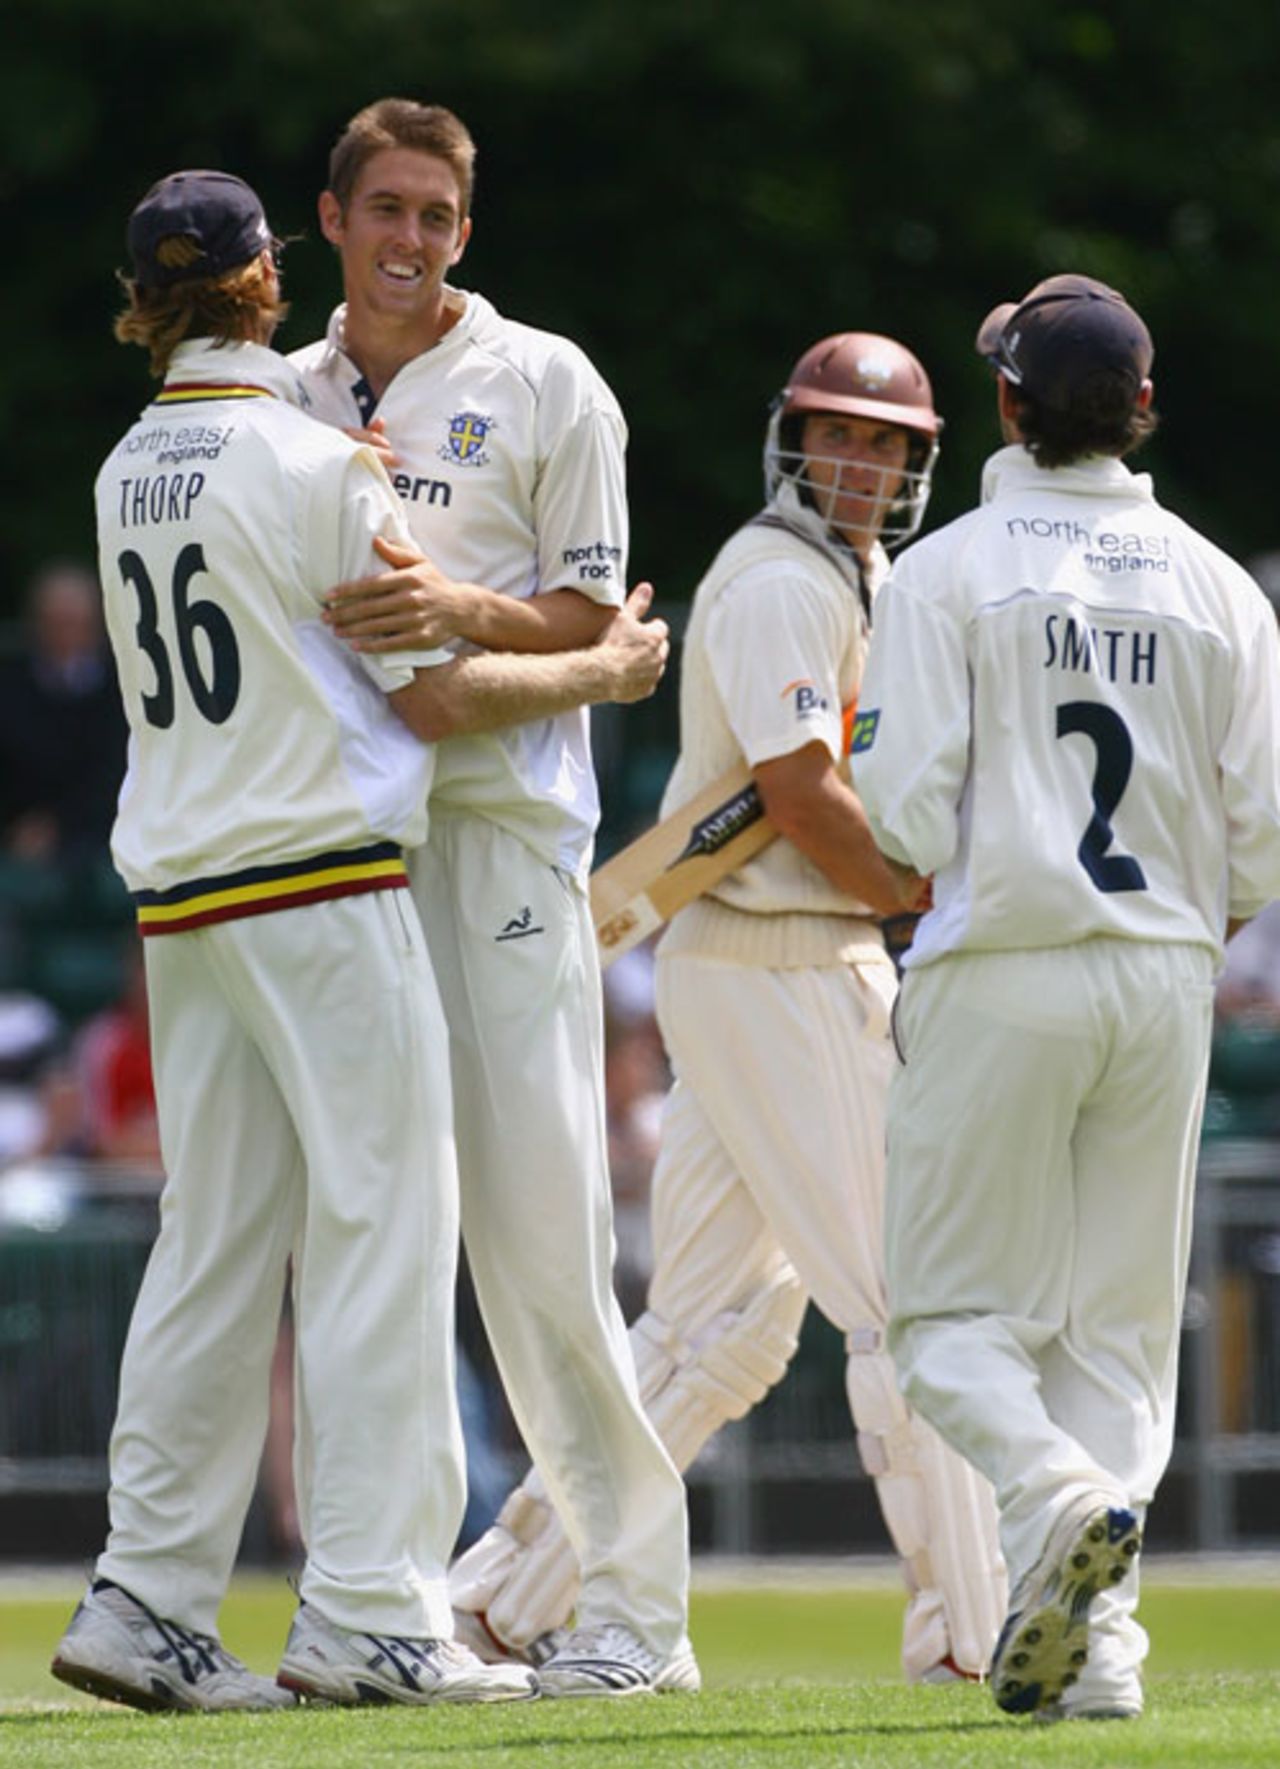 Ben Harmison celebrates taking the wicket of Stewart Walters, Surrey v Durham, Guildford, July 16, 2008